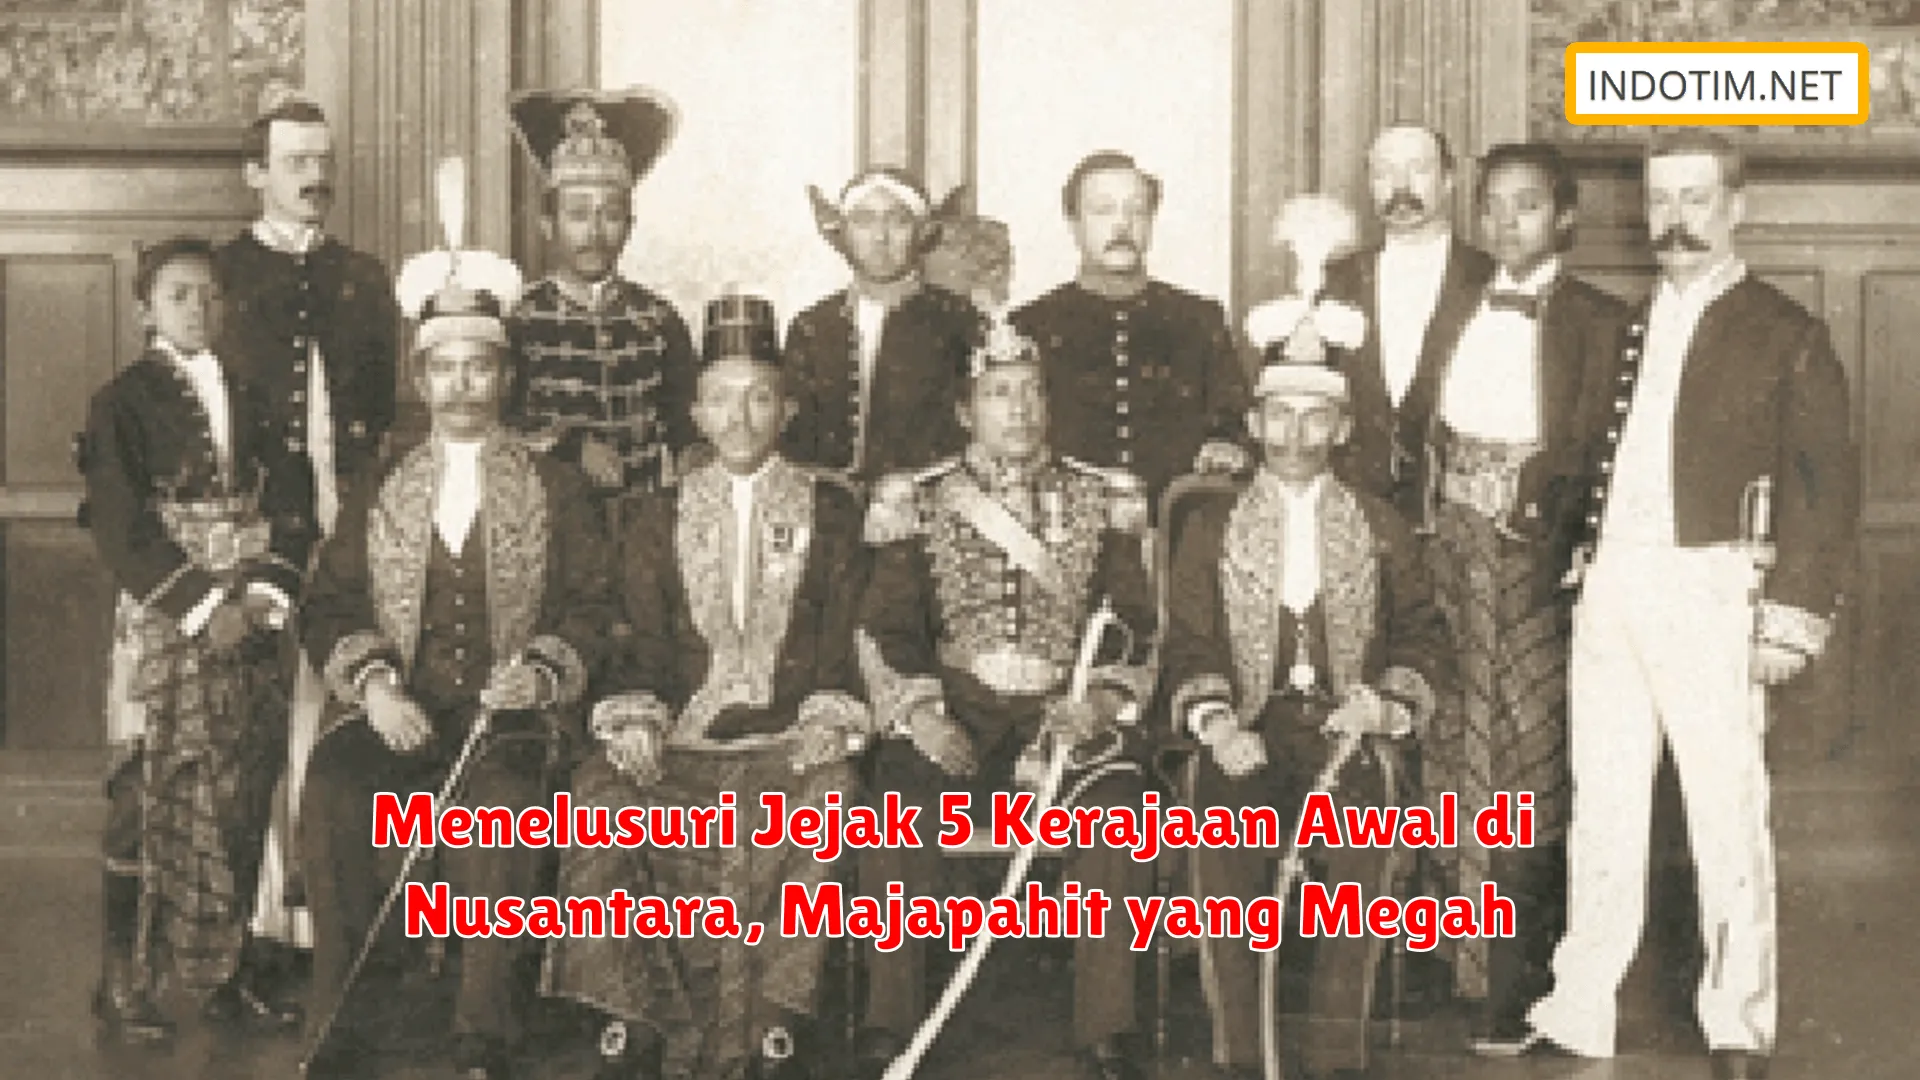 Menelusuri Jejak 5 Kerajaan Awal di Nusantara, Majapahit yang Megah